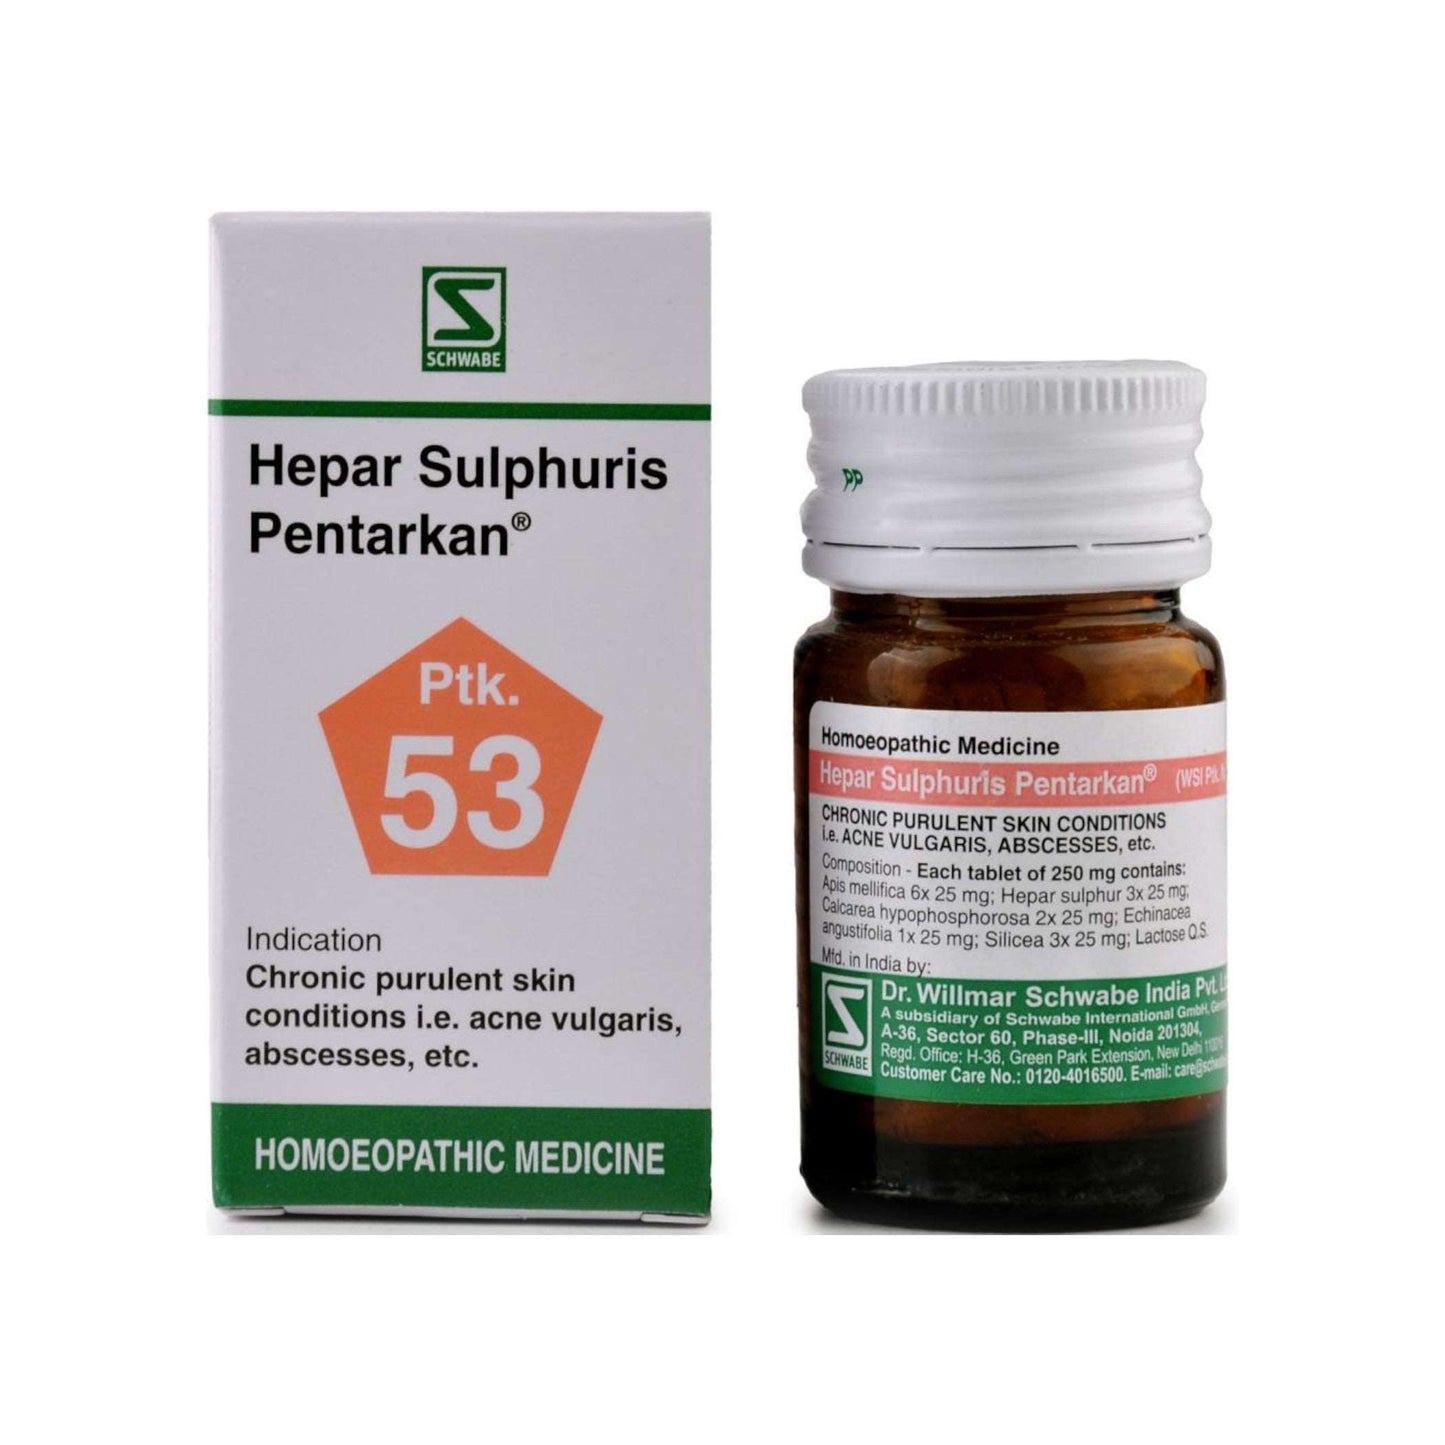 Dr. Schwabe Homeopathy Hepar Sulphuris Pentarkan Tablets 20 g - Versatile homeopathic remedy.